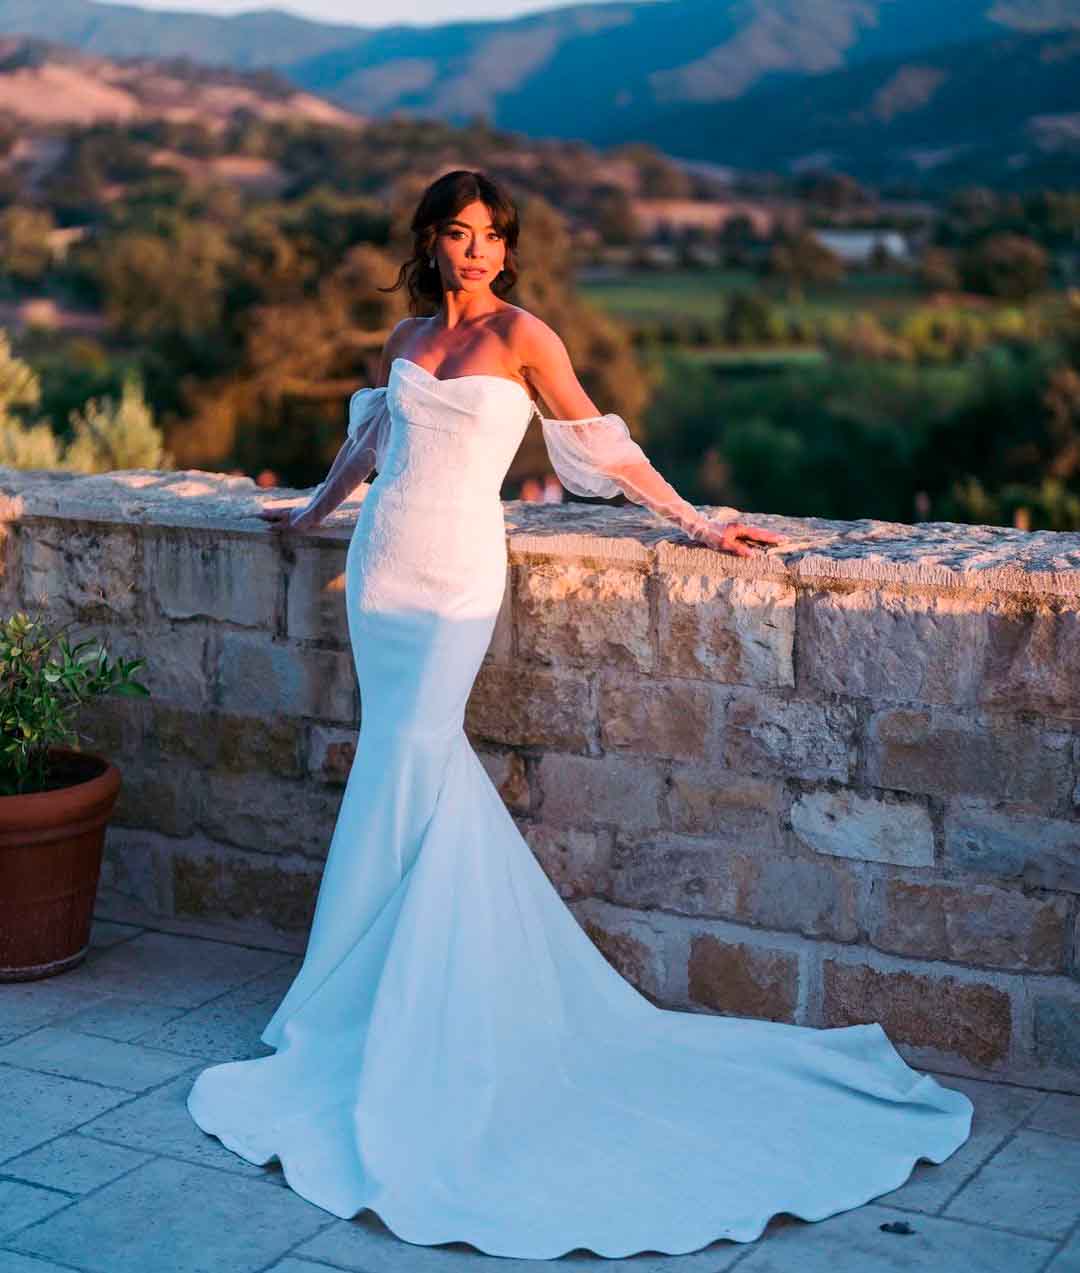 Top 6 Marcas de Vestidos de Noiva - Etiqueta Unica